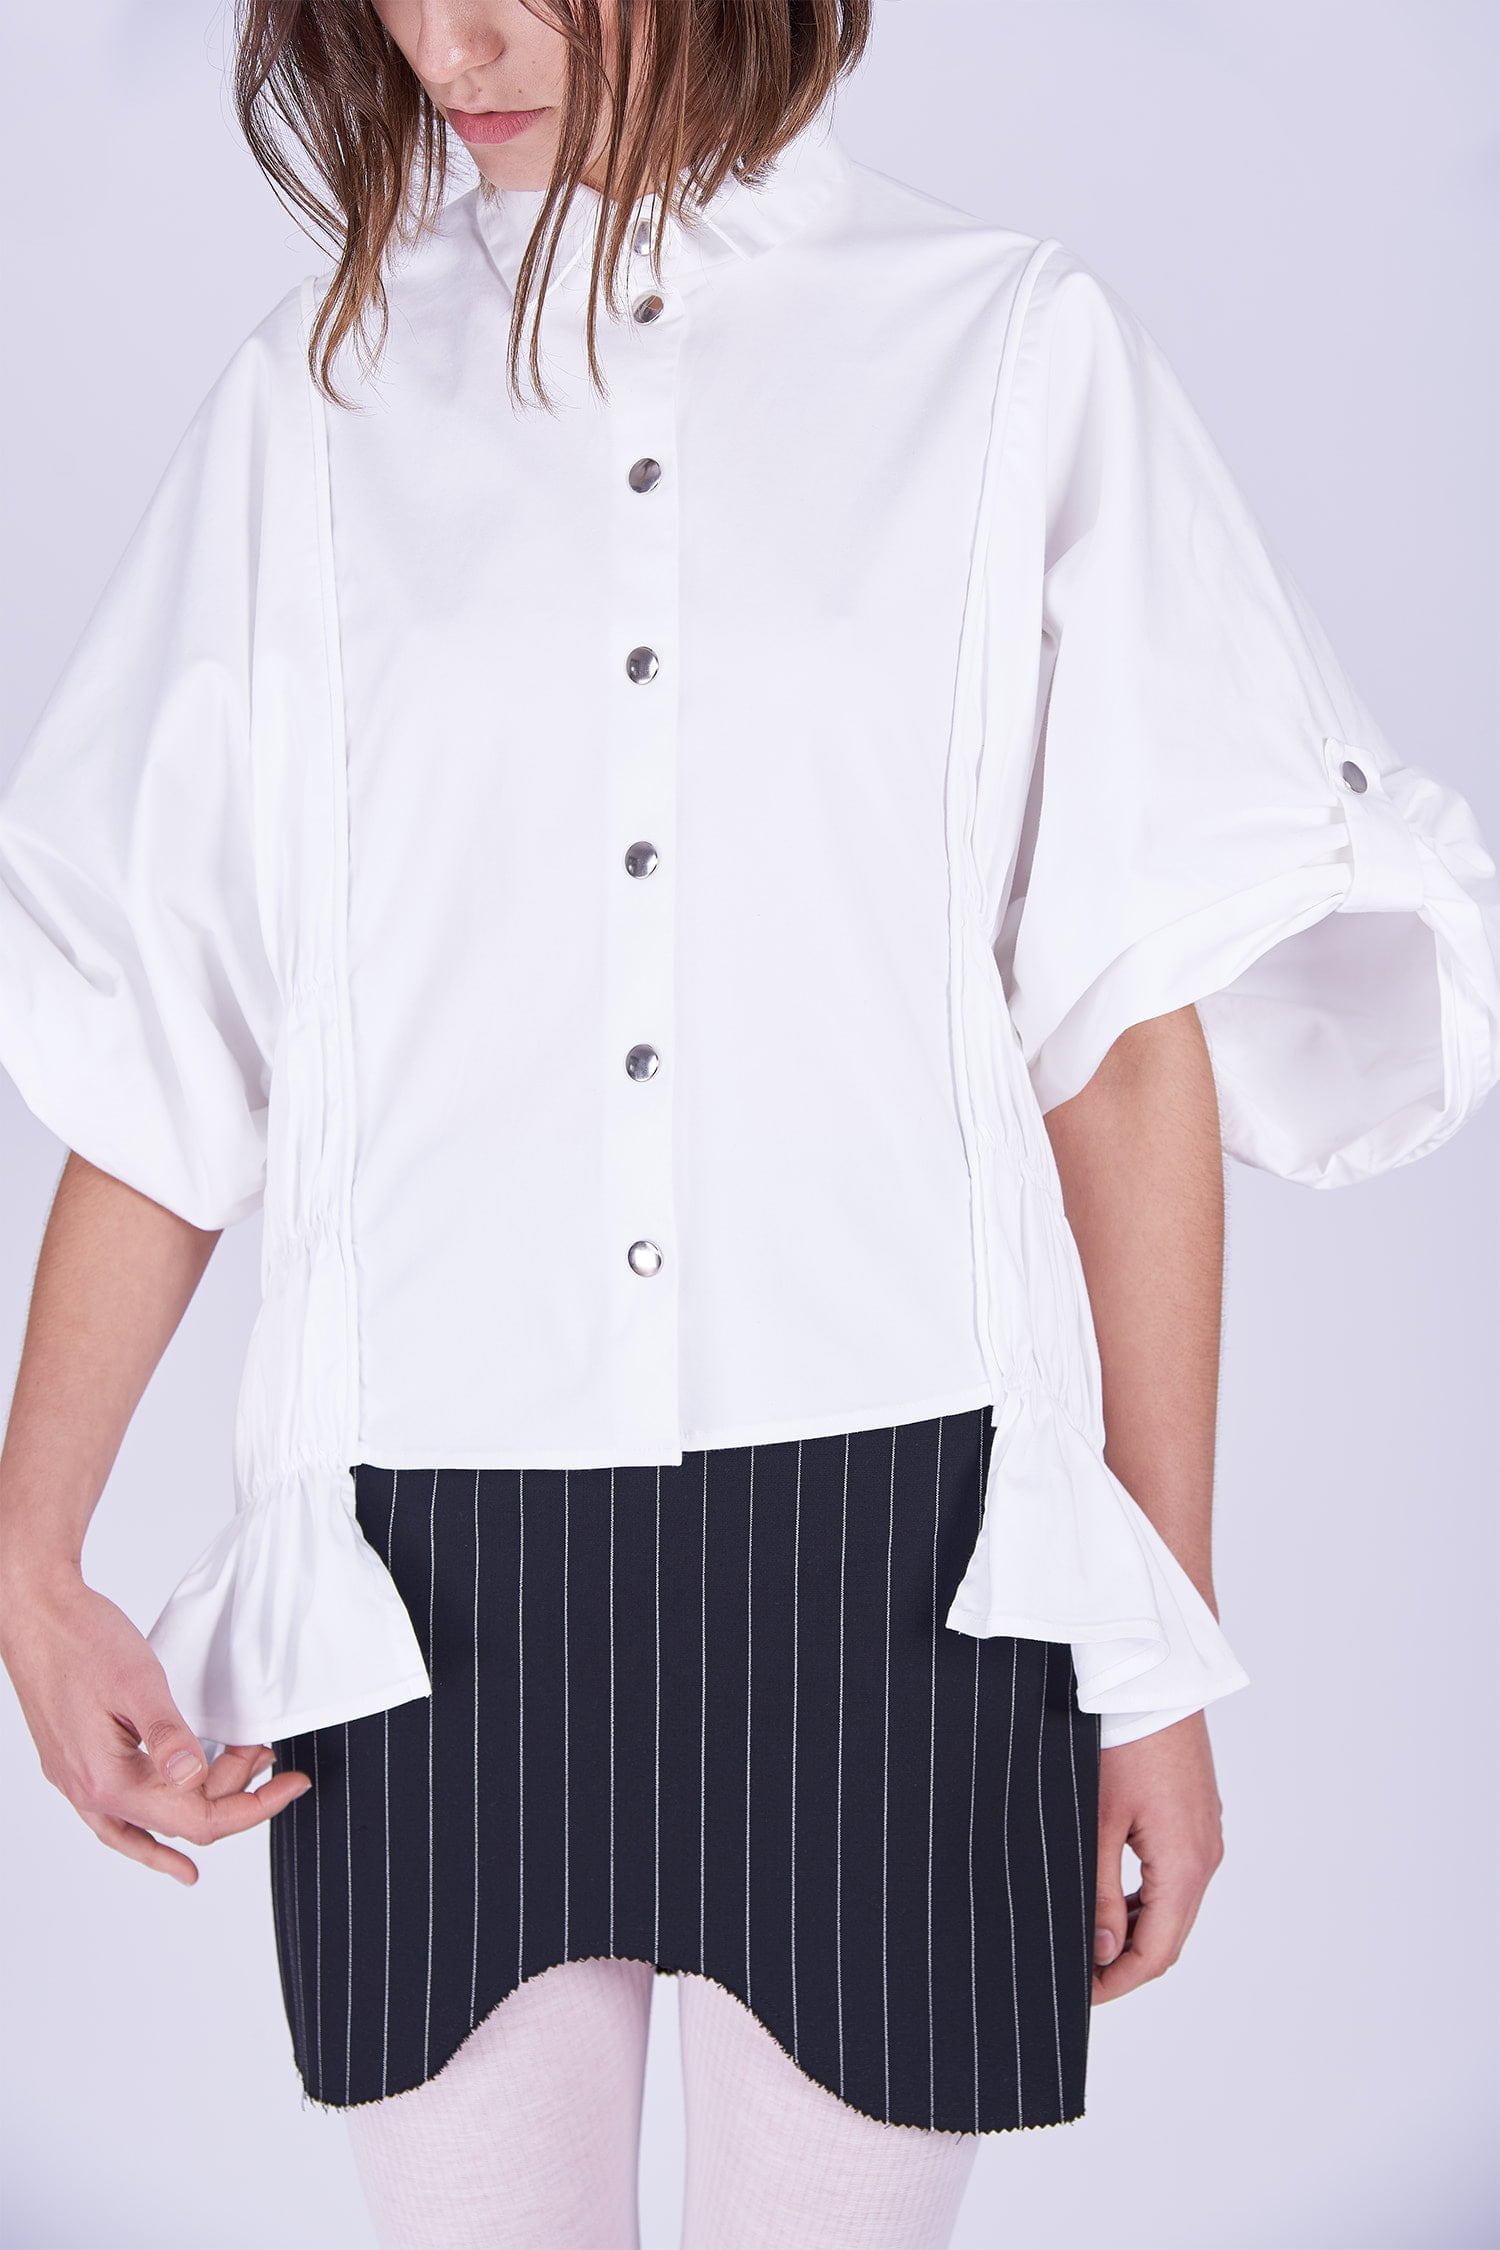 Acephala Ps2020 Black Striped Skirt White Exuberant Gathered Czarna Spodnica Biala Koszula Marszczona Detail 2